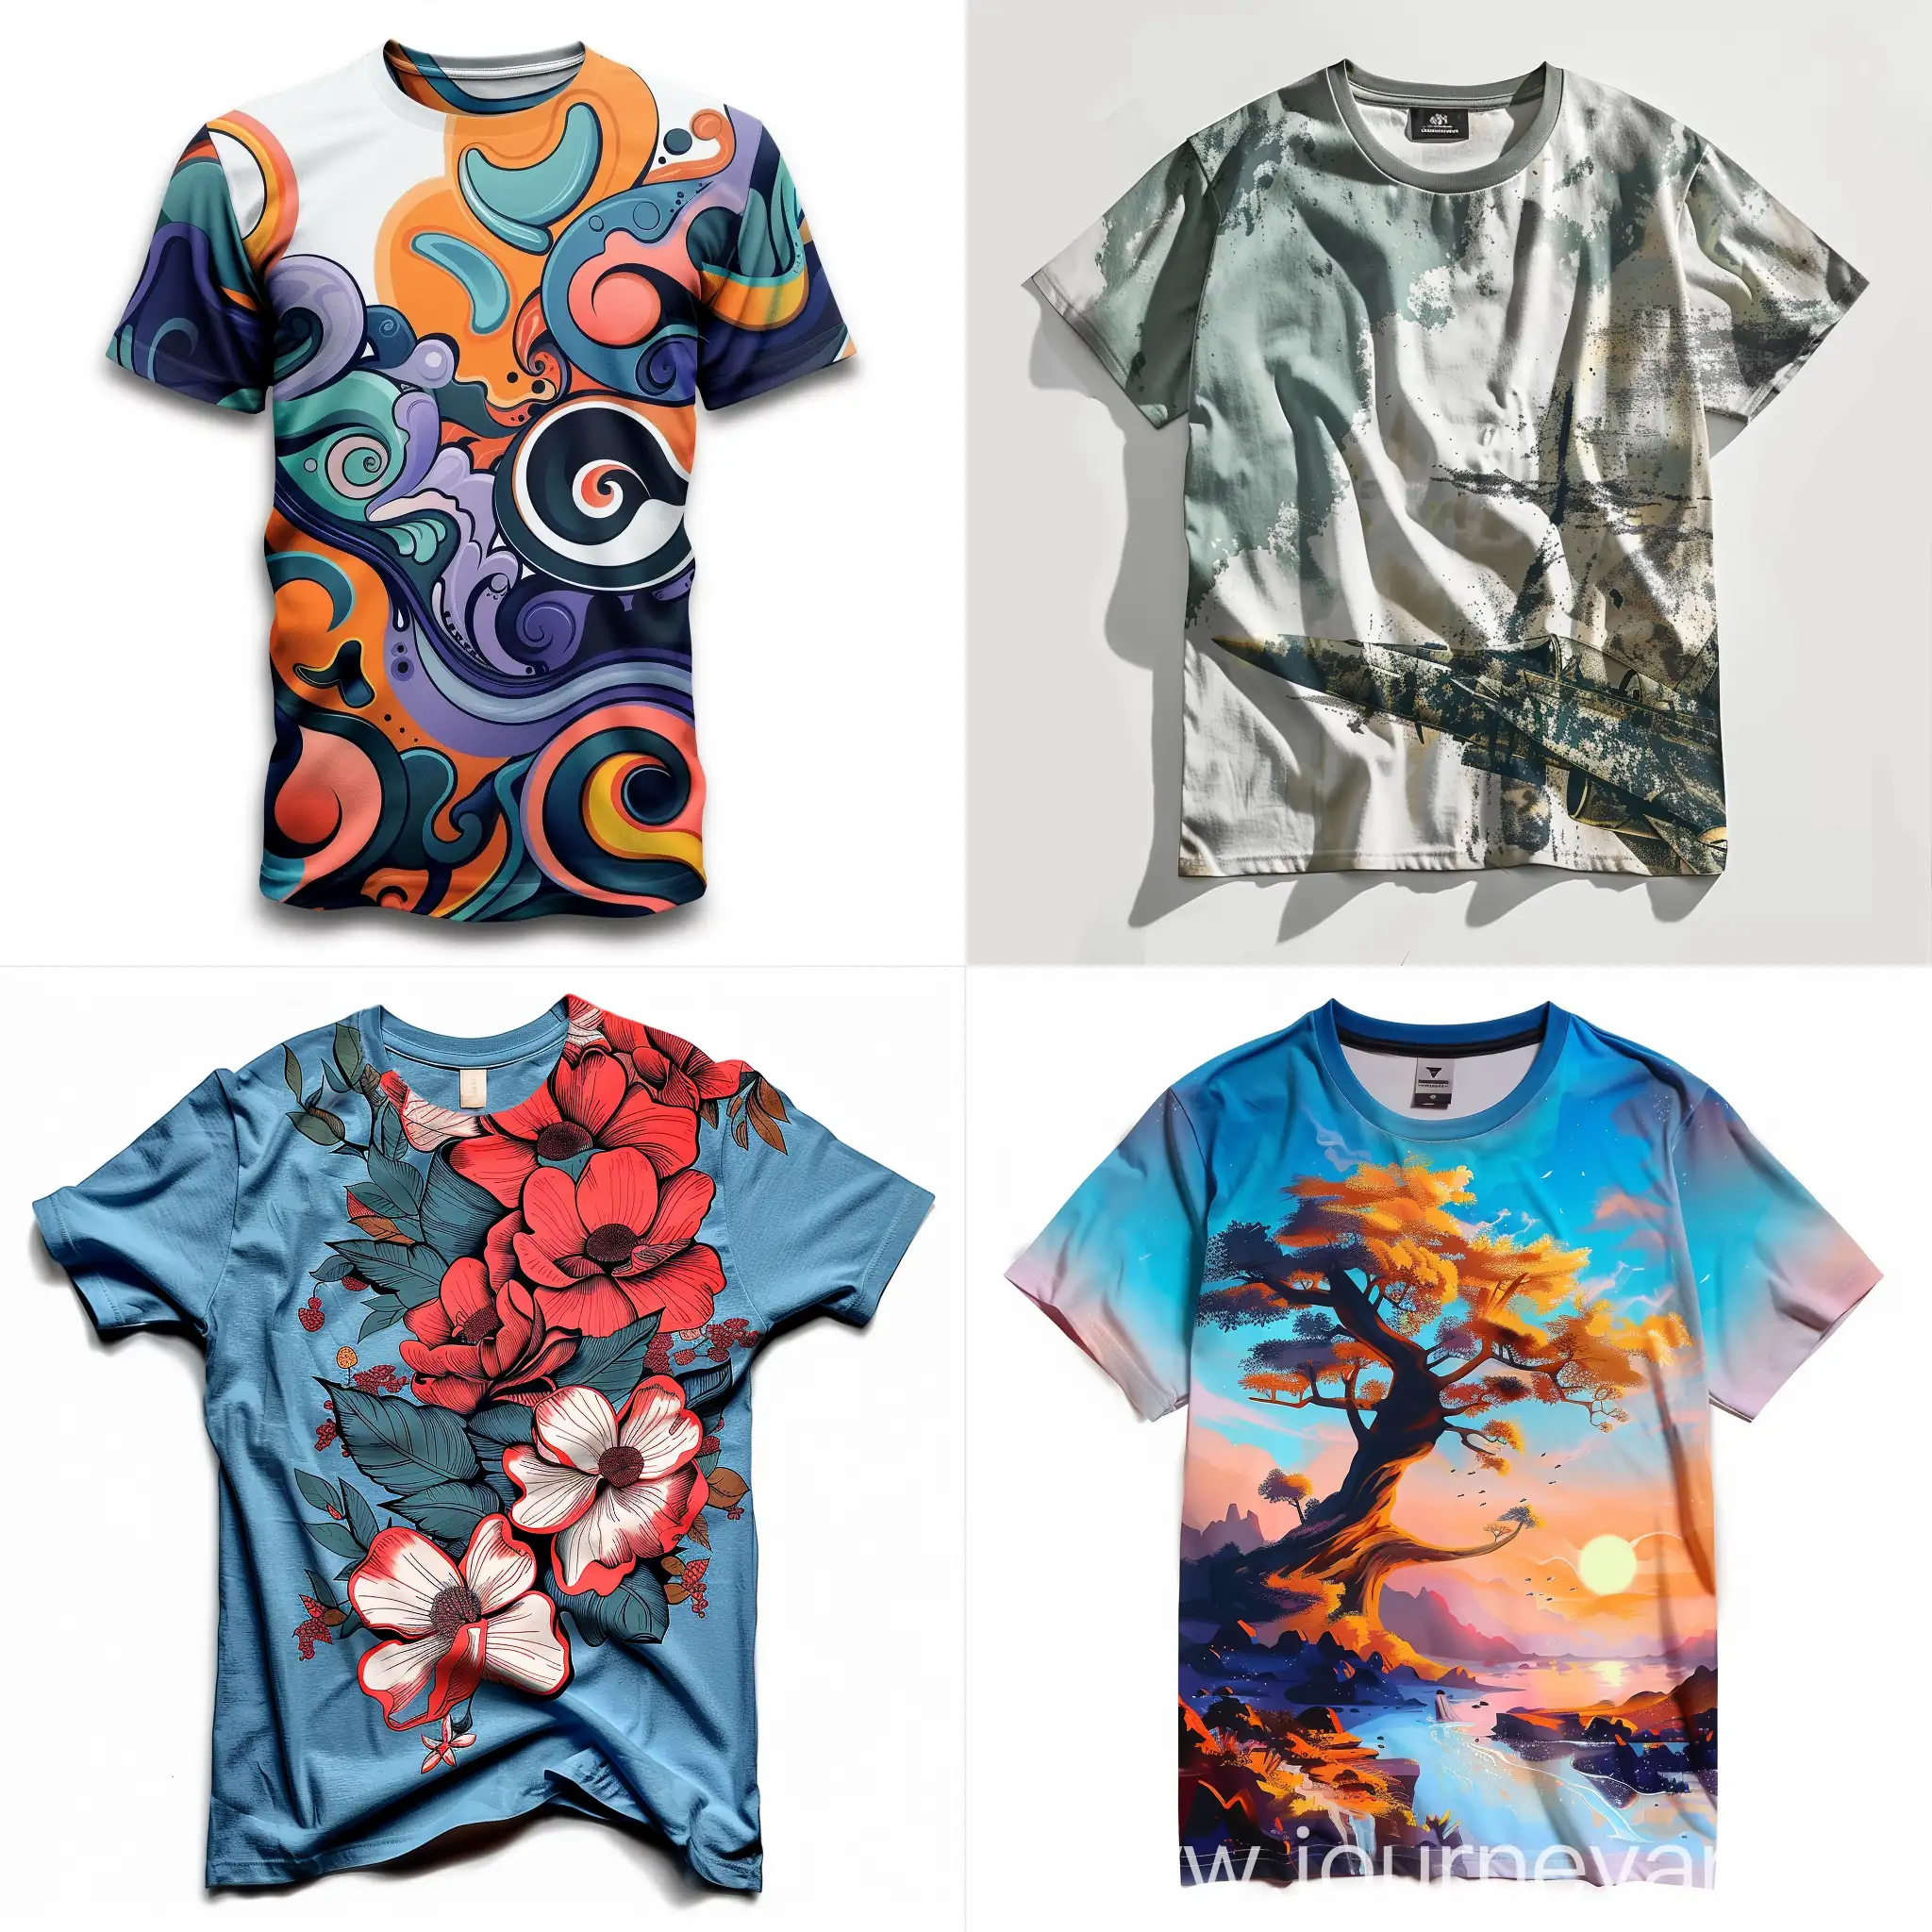 Colorful-Tshirt-Designs-for-Square-Canvas-Prints